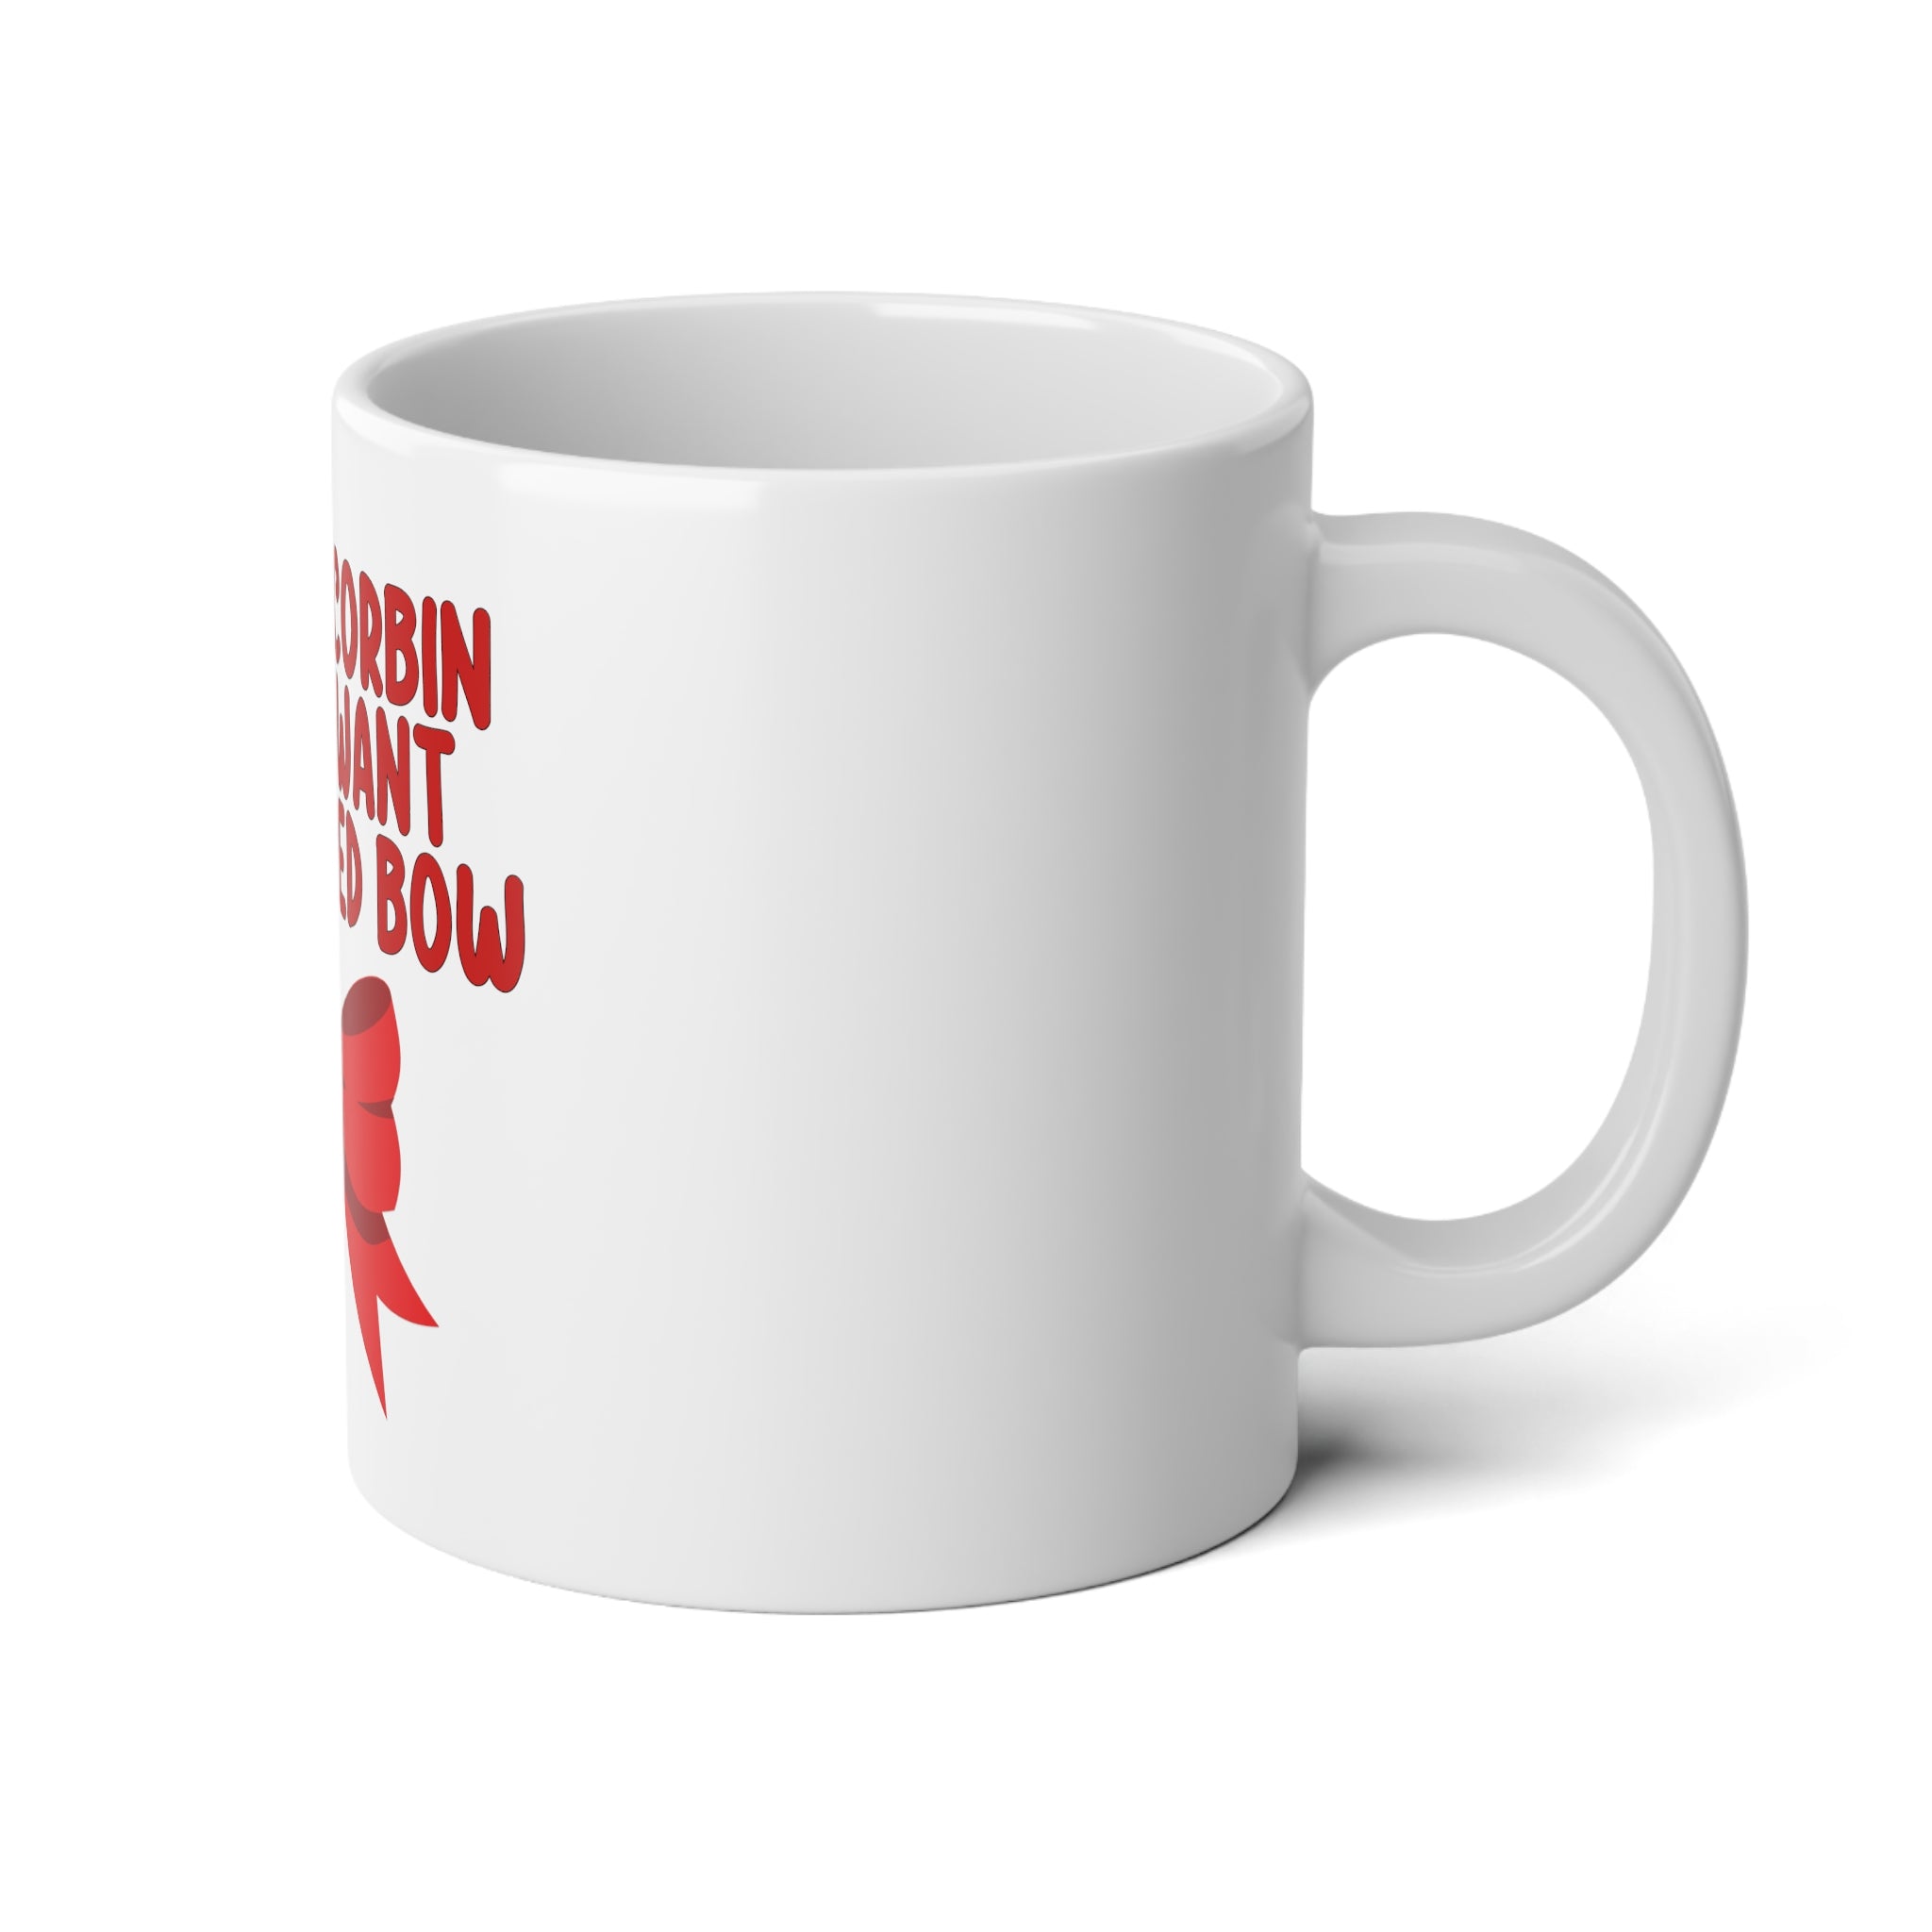 Brando Corbin is All I Want in a Big Red Bow Jumbo Mug